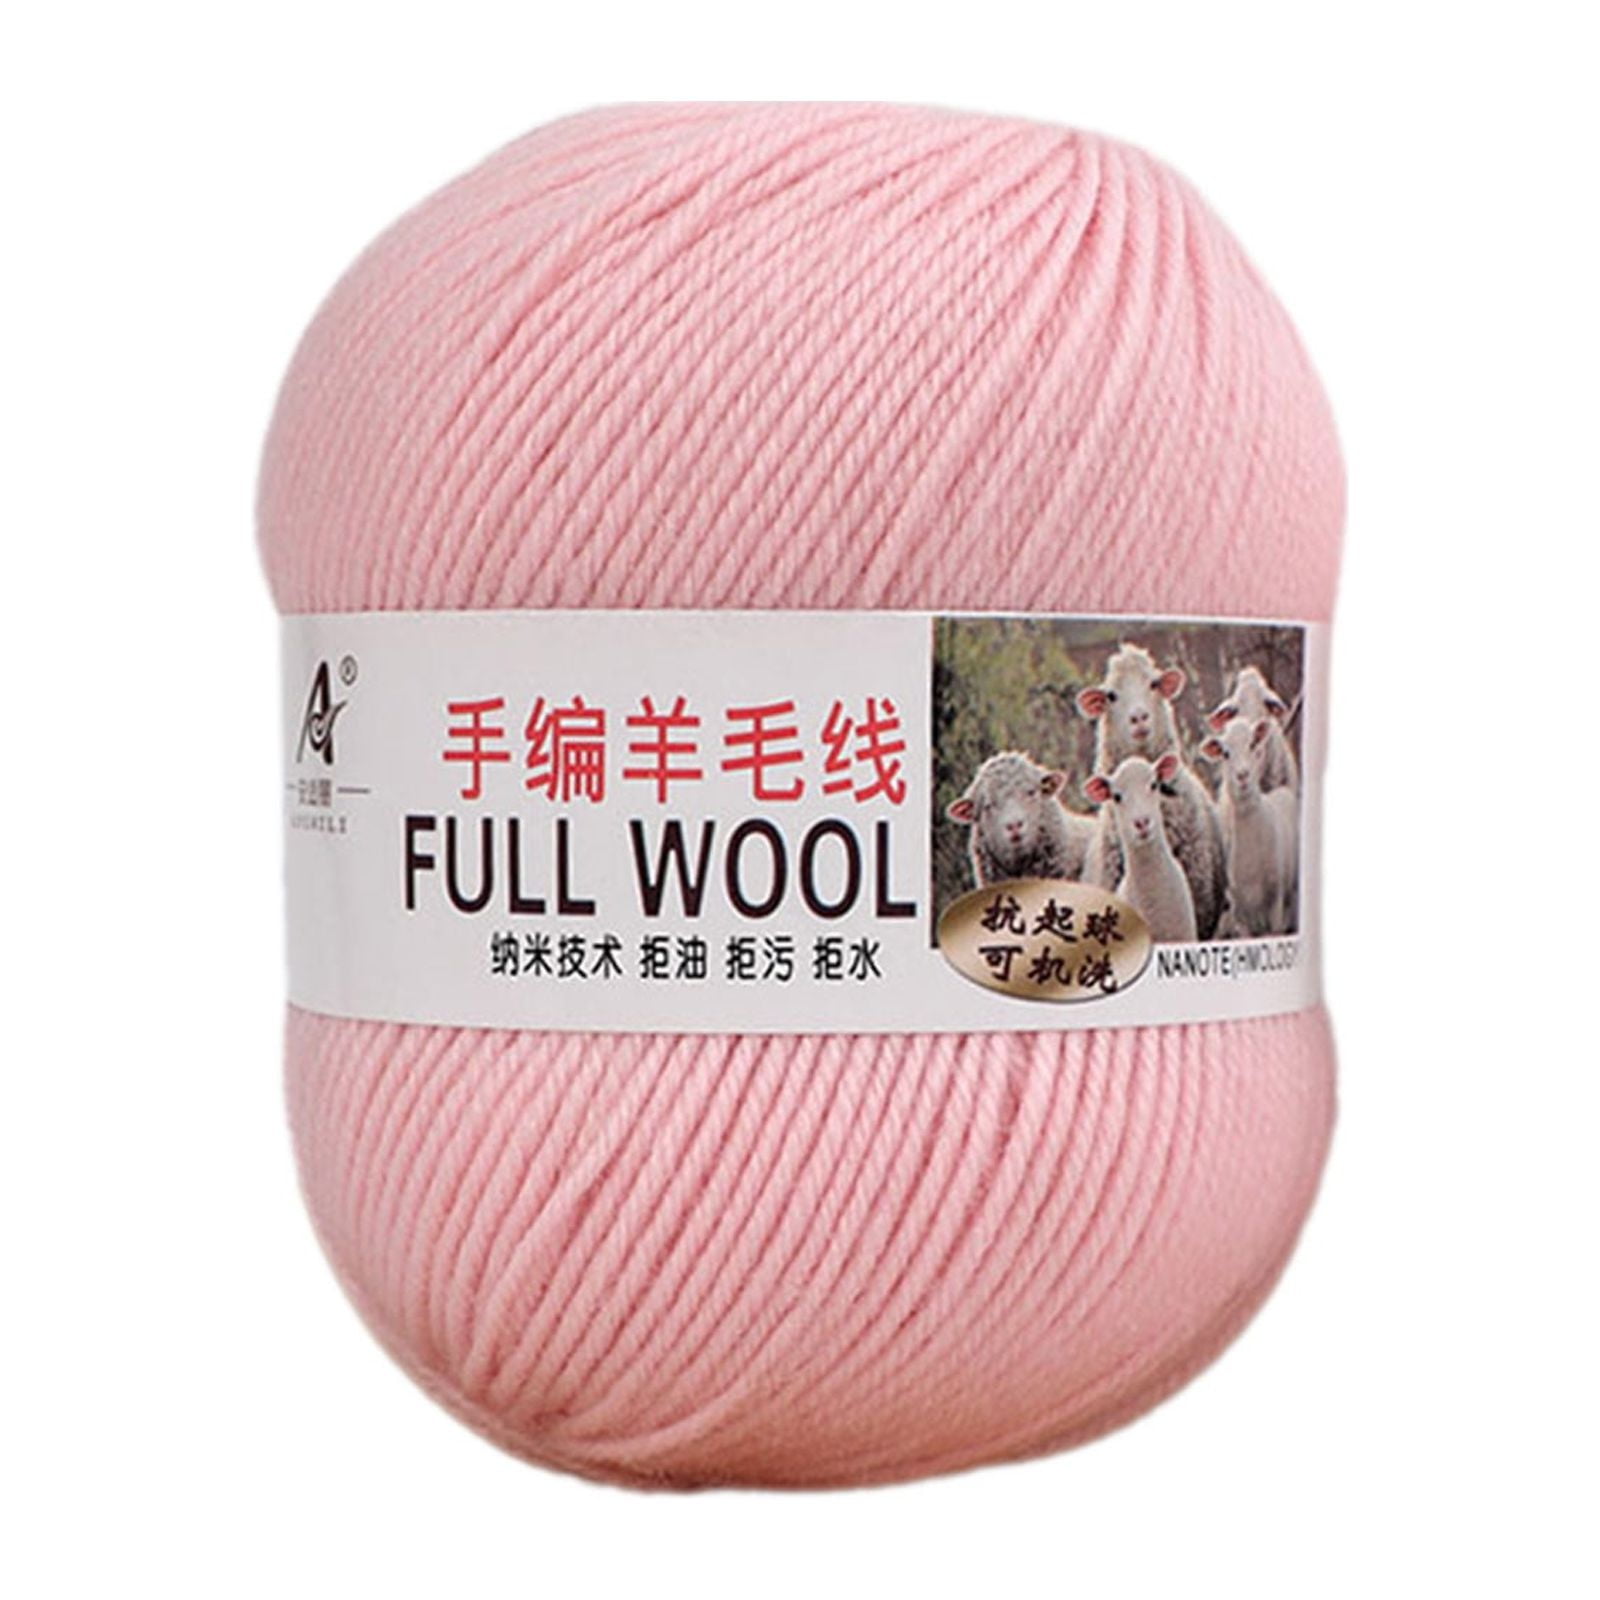 WEMDBD Mercerized Super Soft Wool Yarn Medium Thick Hand Knit Sweater ...